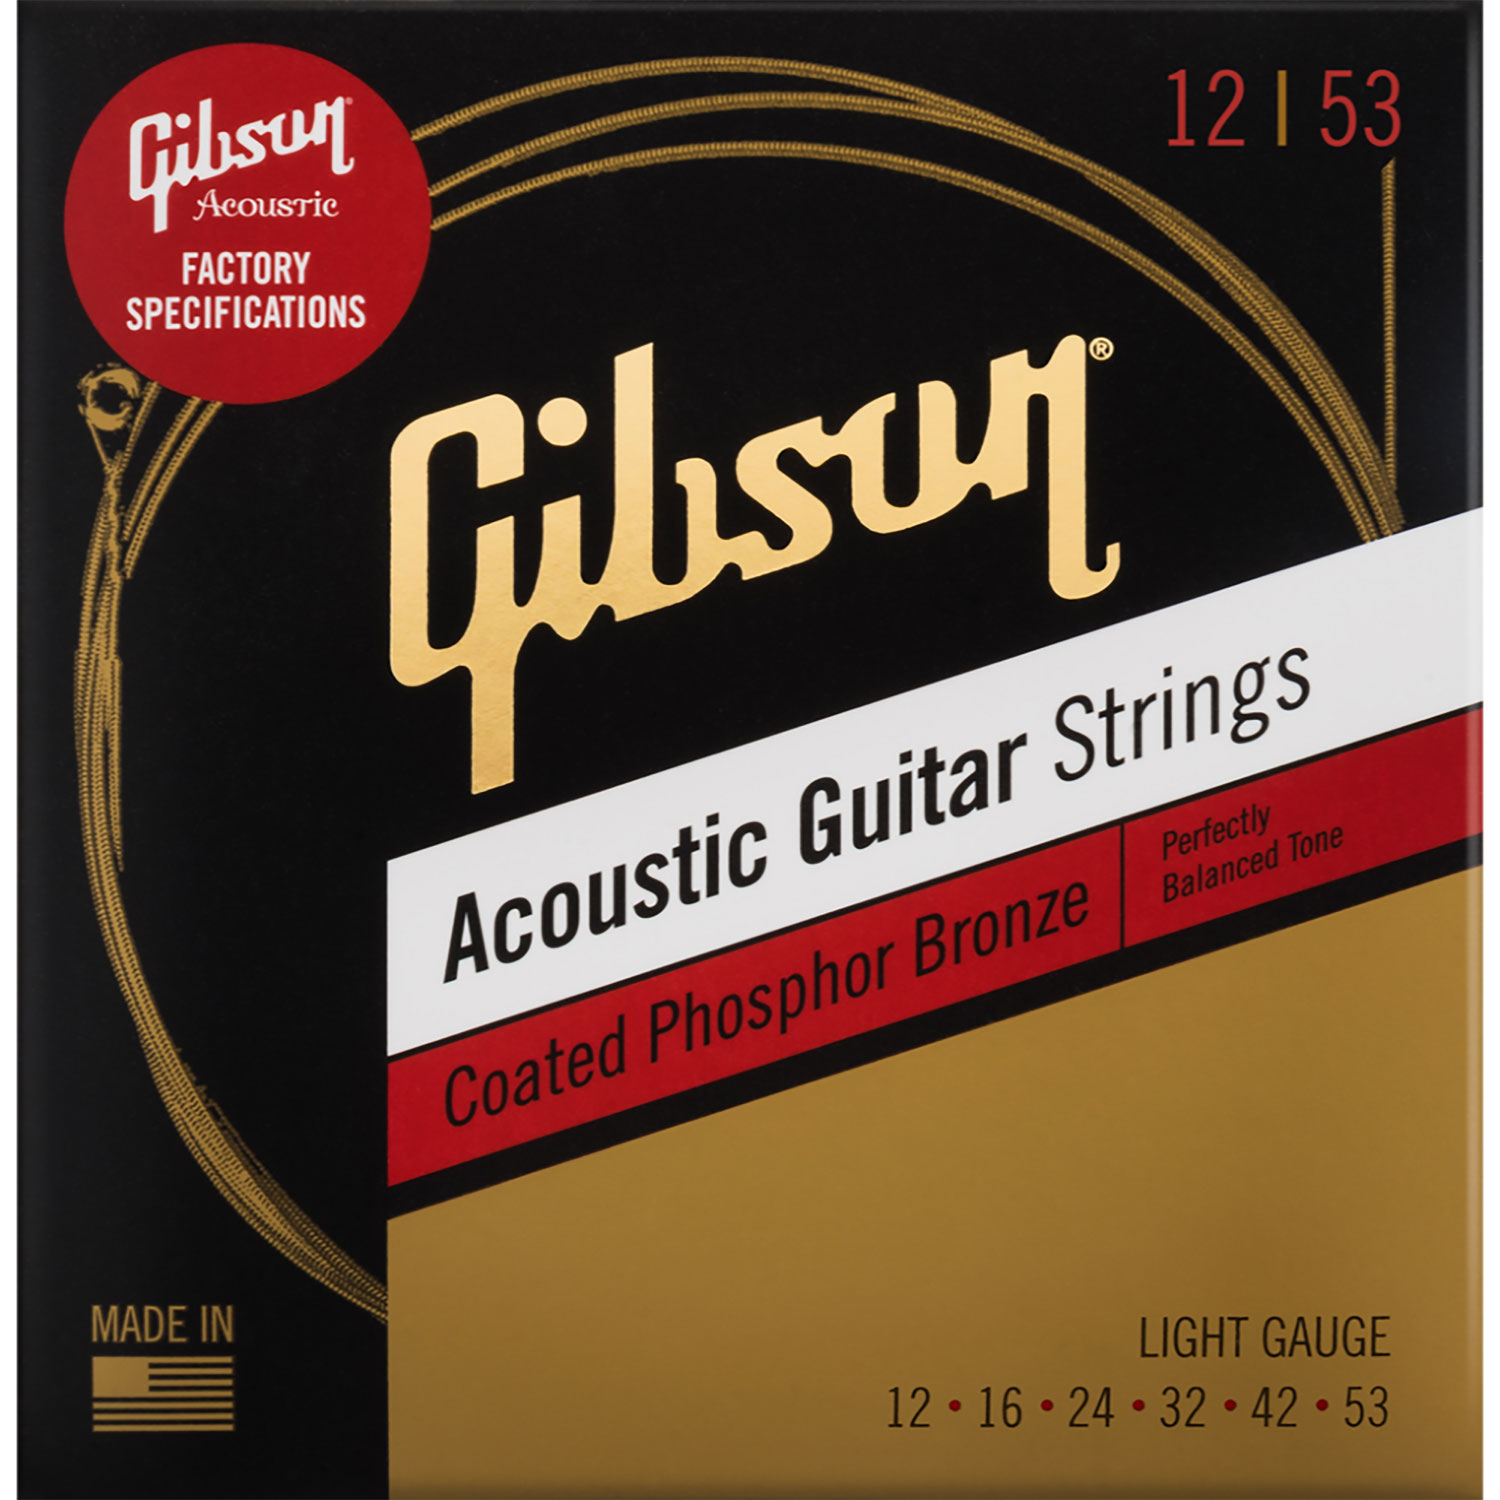 Gibson Coated Phosphor Bronze 0.012 - 0.053 Light Gauge Acoustic Guitar Strings (SAG-CPB12)